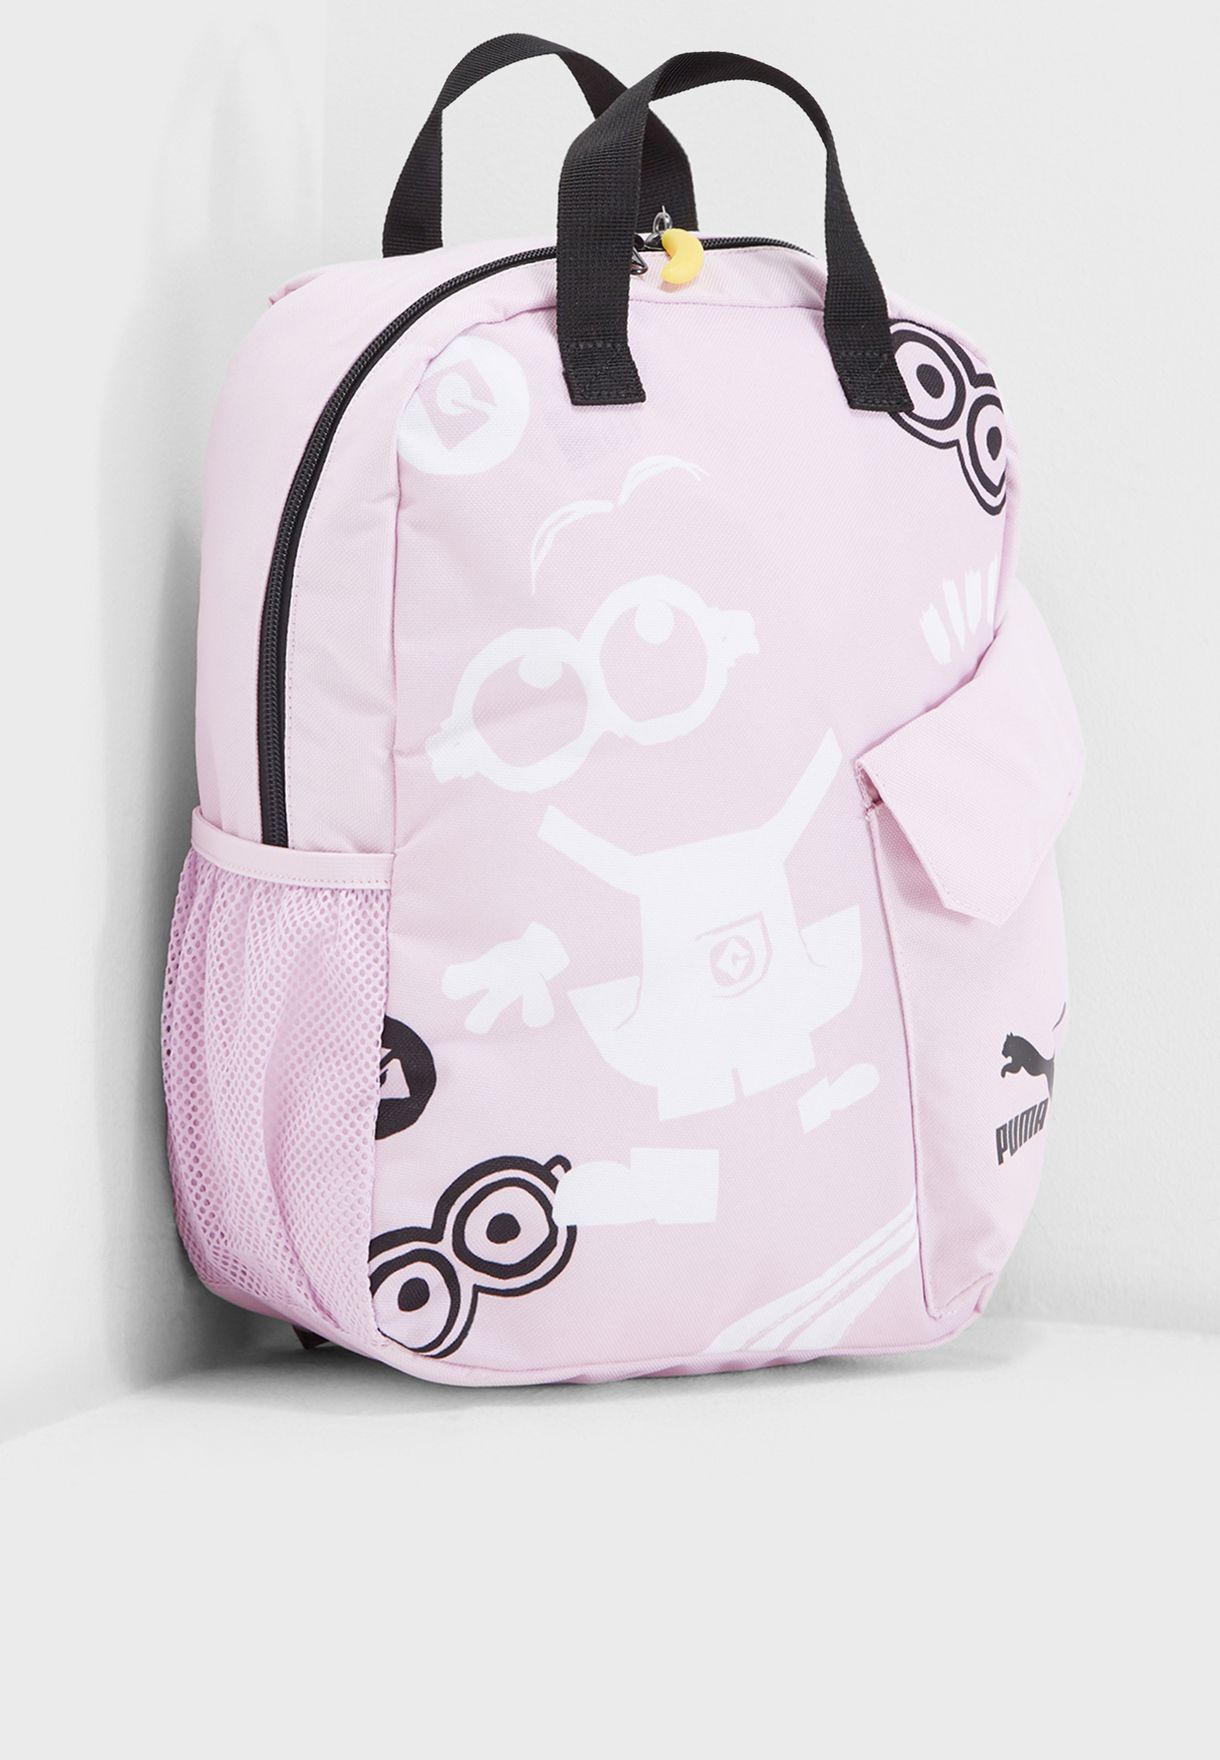 puma x minions backpack